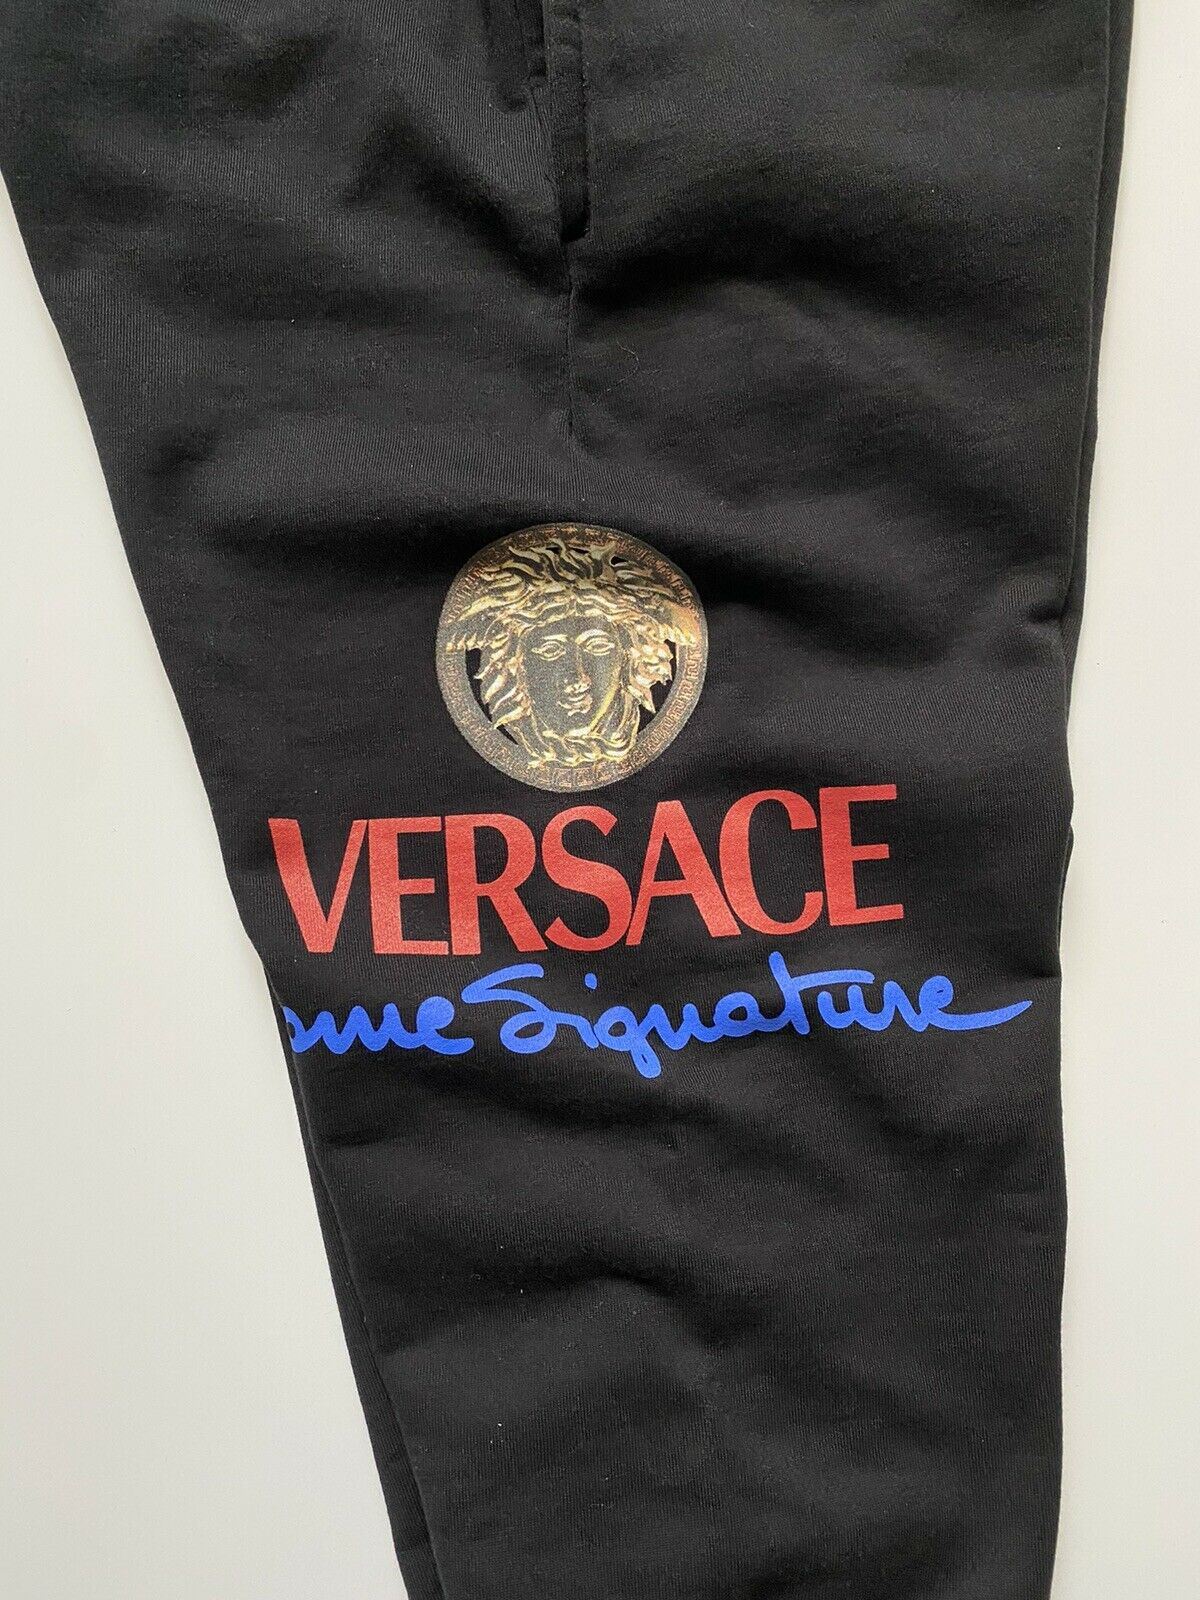 NWT $895 Versace Mens Medusa Logo Tailored Fit Black Activewear Pants 2XL A86025